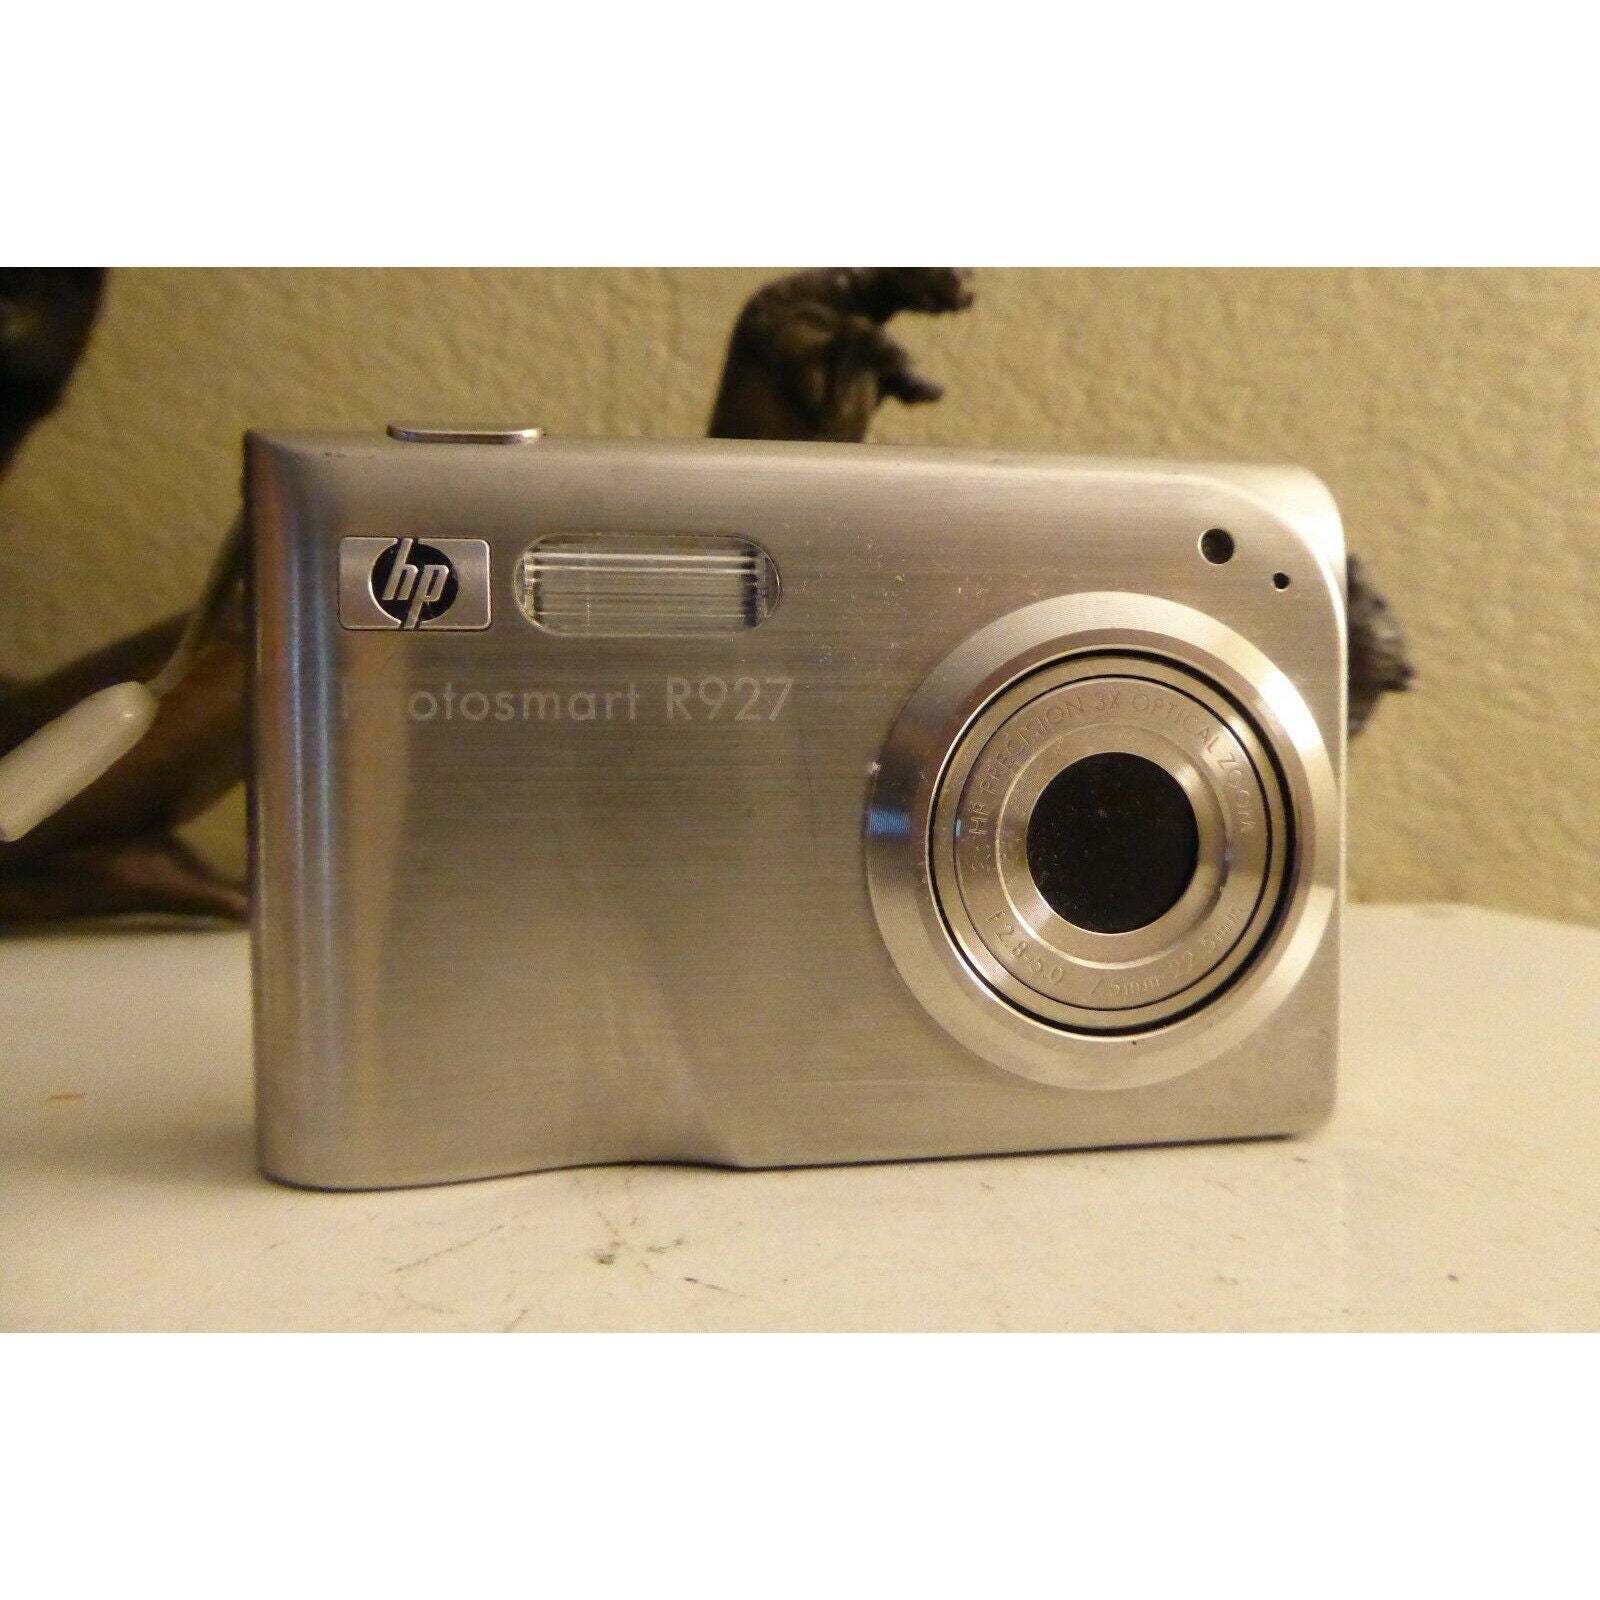 HP PhotoSmart R927xi 8.2MP Digital Camera - Silver - $75.00